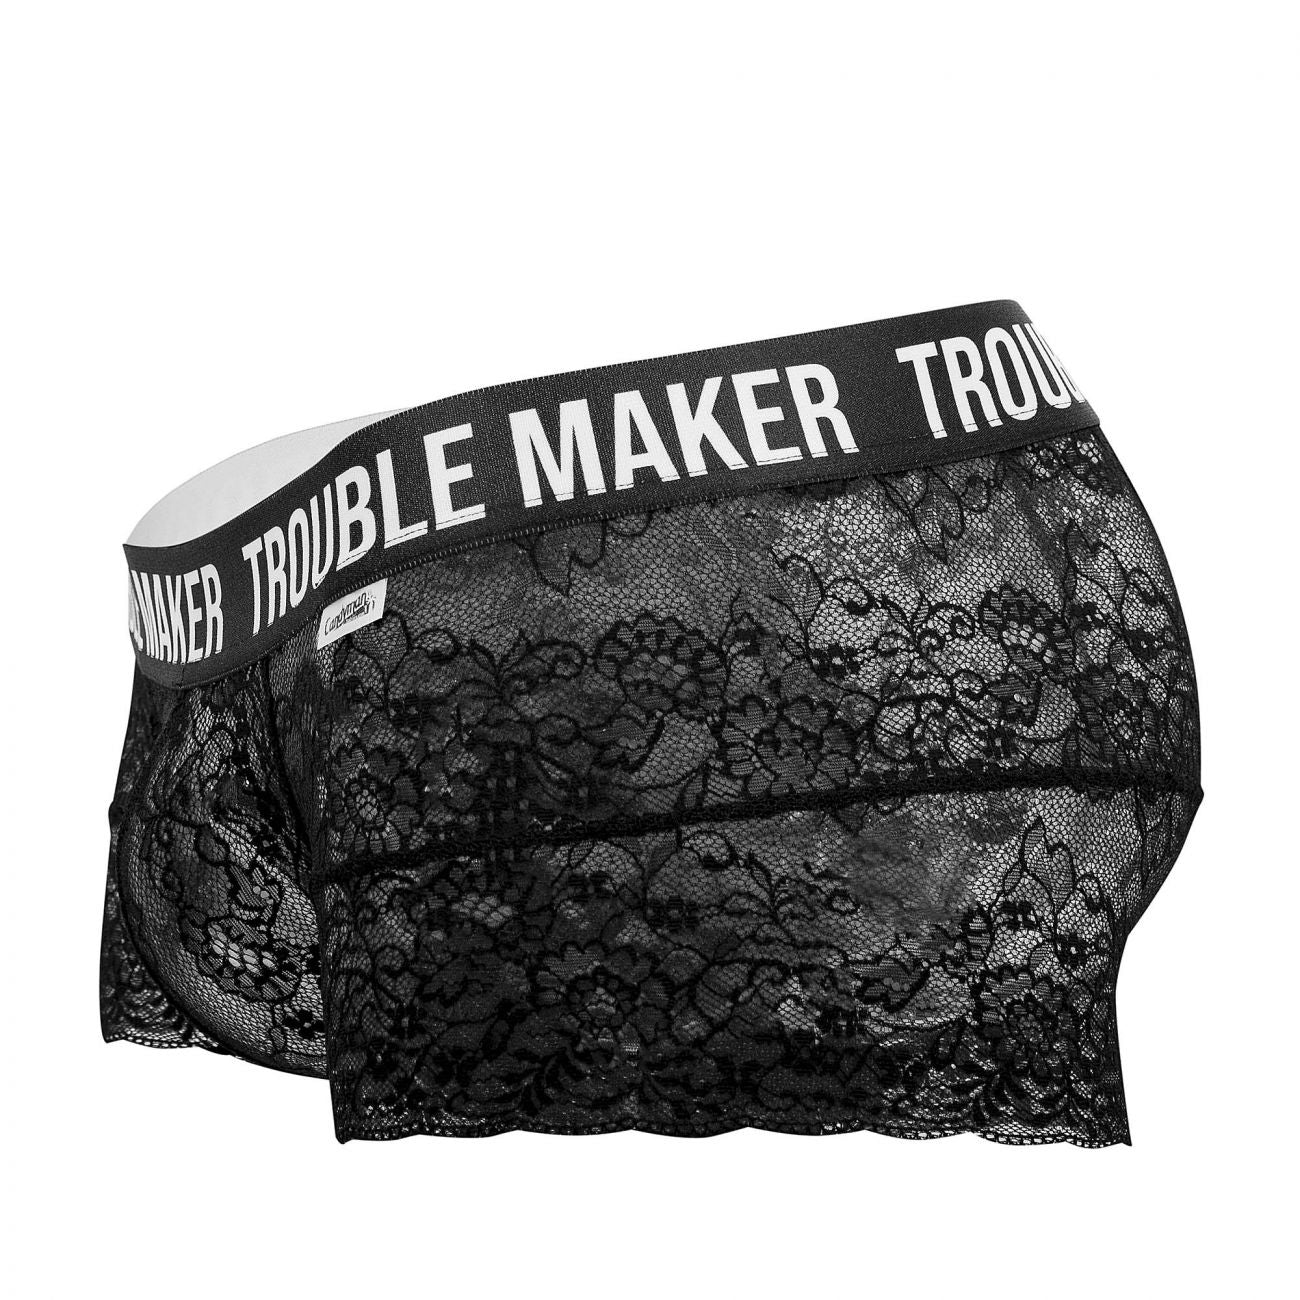 CandyMan 99616 Trouble Maker Lace Trunks Black